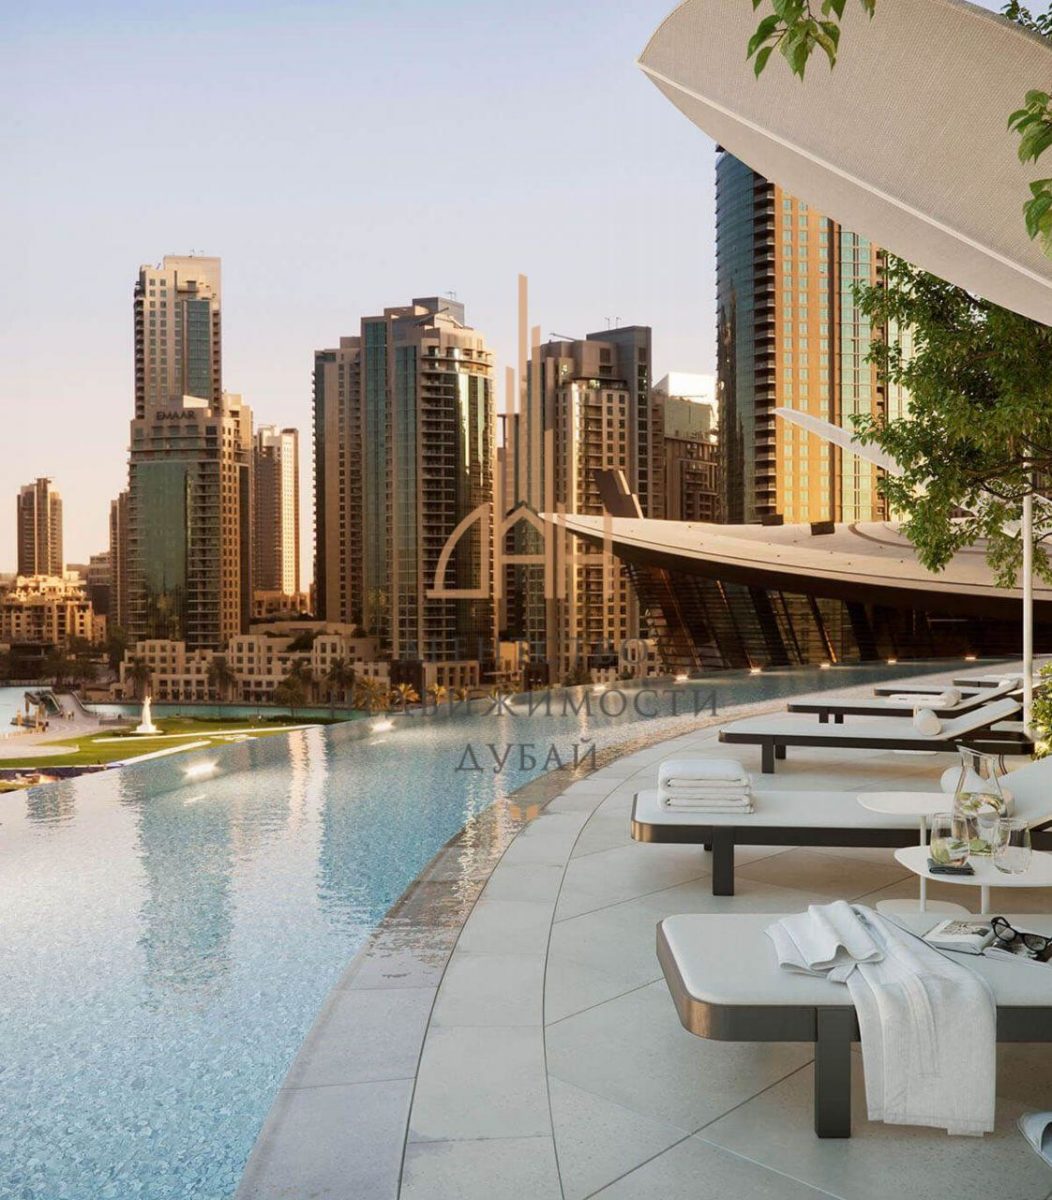 FGB, 3 Abu Dhabi realty majors запускают СП по недвижимости стоимостью $ 500 млн